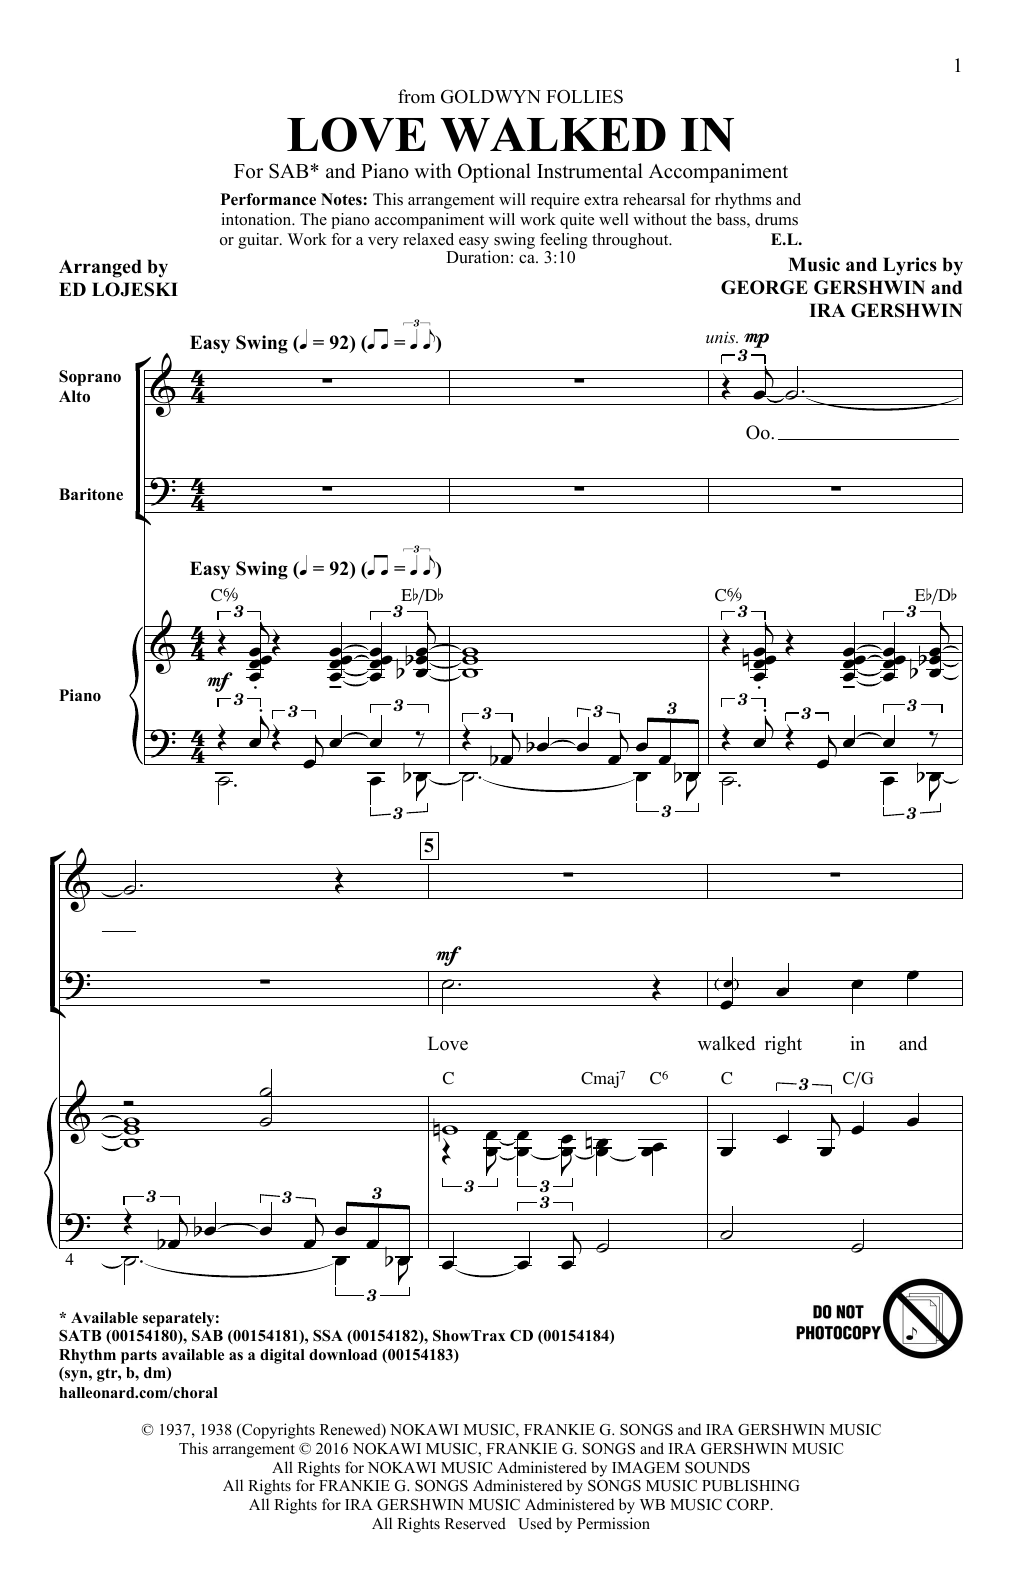 Ed Lojeski Love Walked In Sheet Music Notes & Chords for SSA - Download or Print PDF